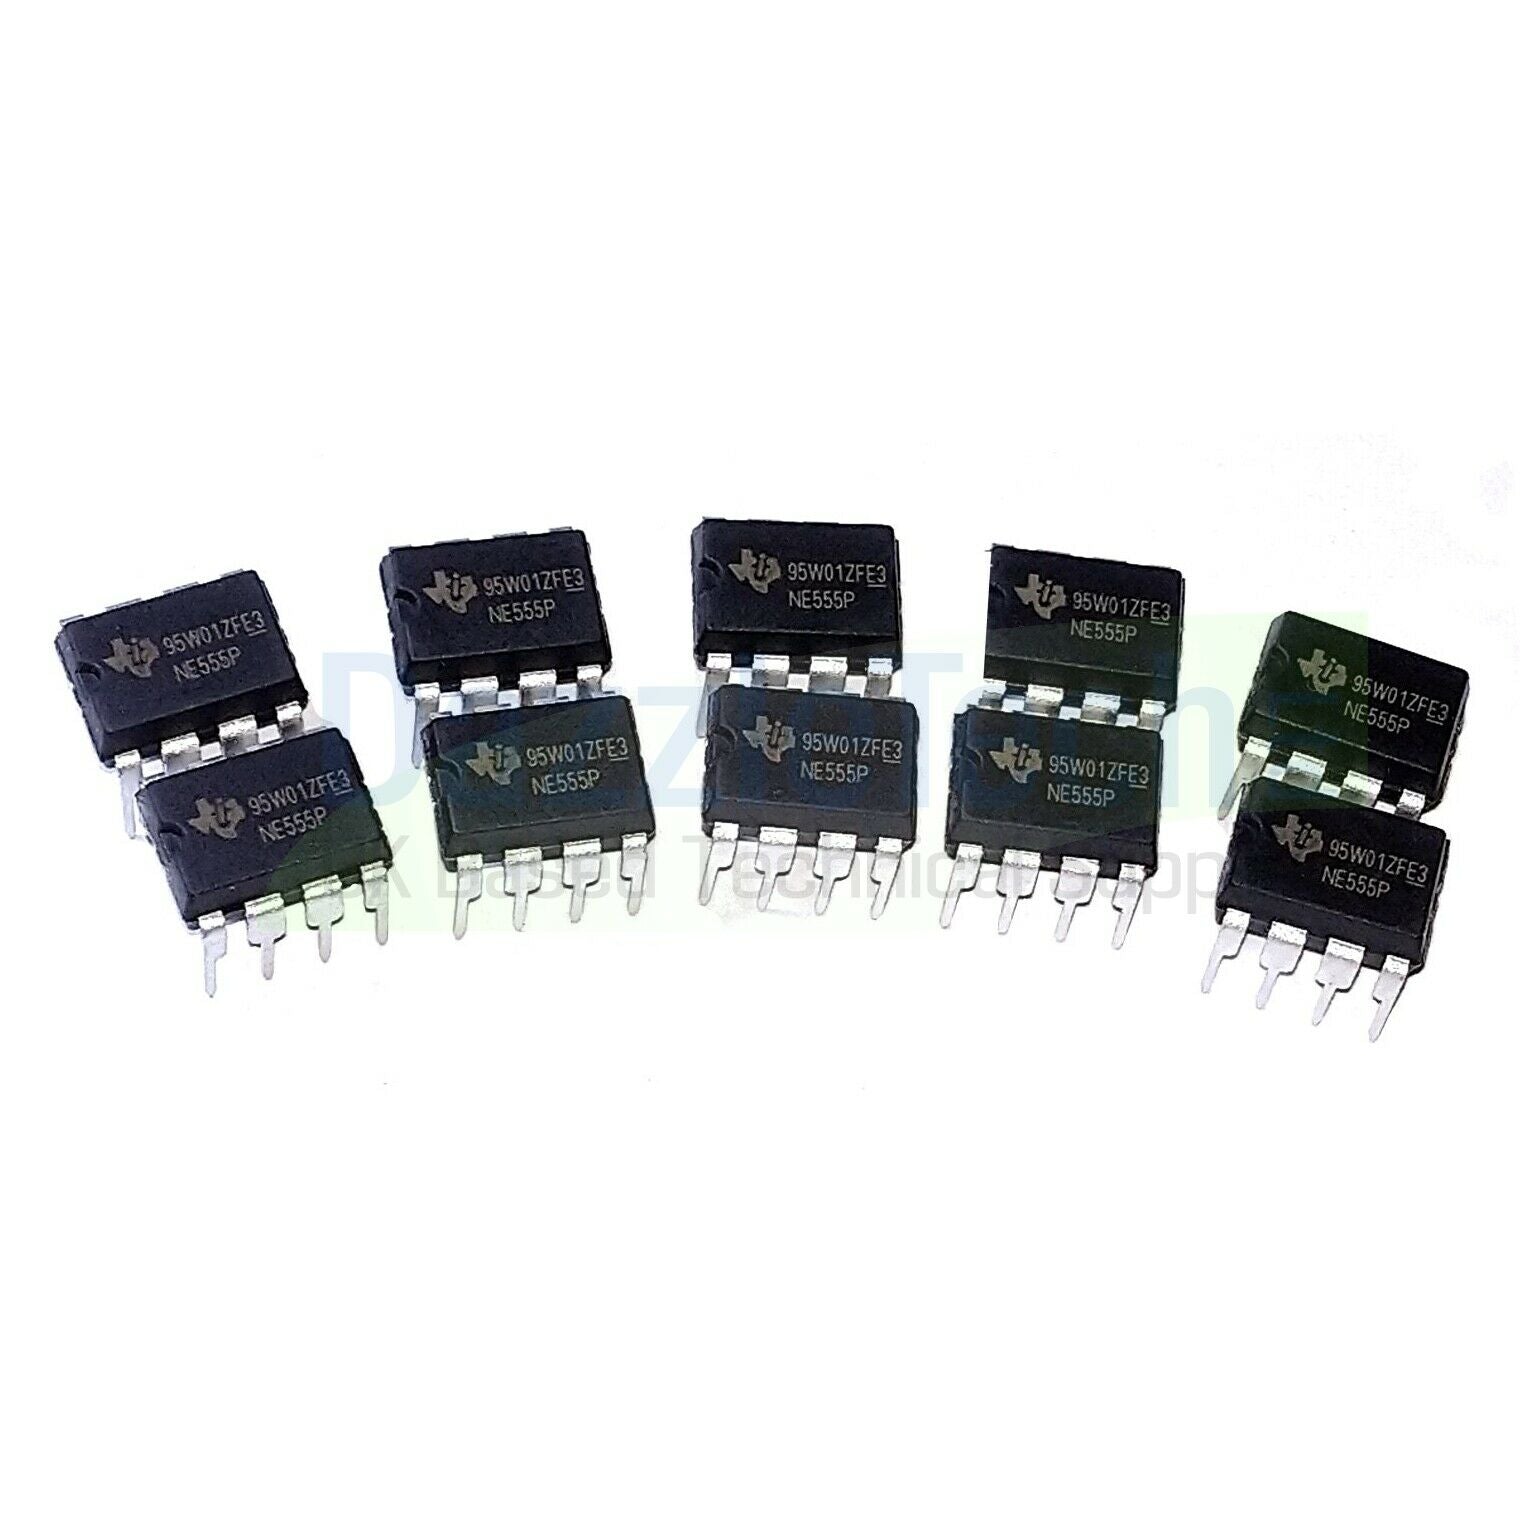 10 x NE555P Texas Instruments Timer IC Integrated Circuit Genuine UK Stock